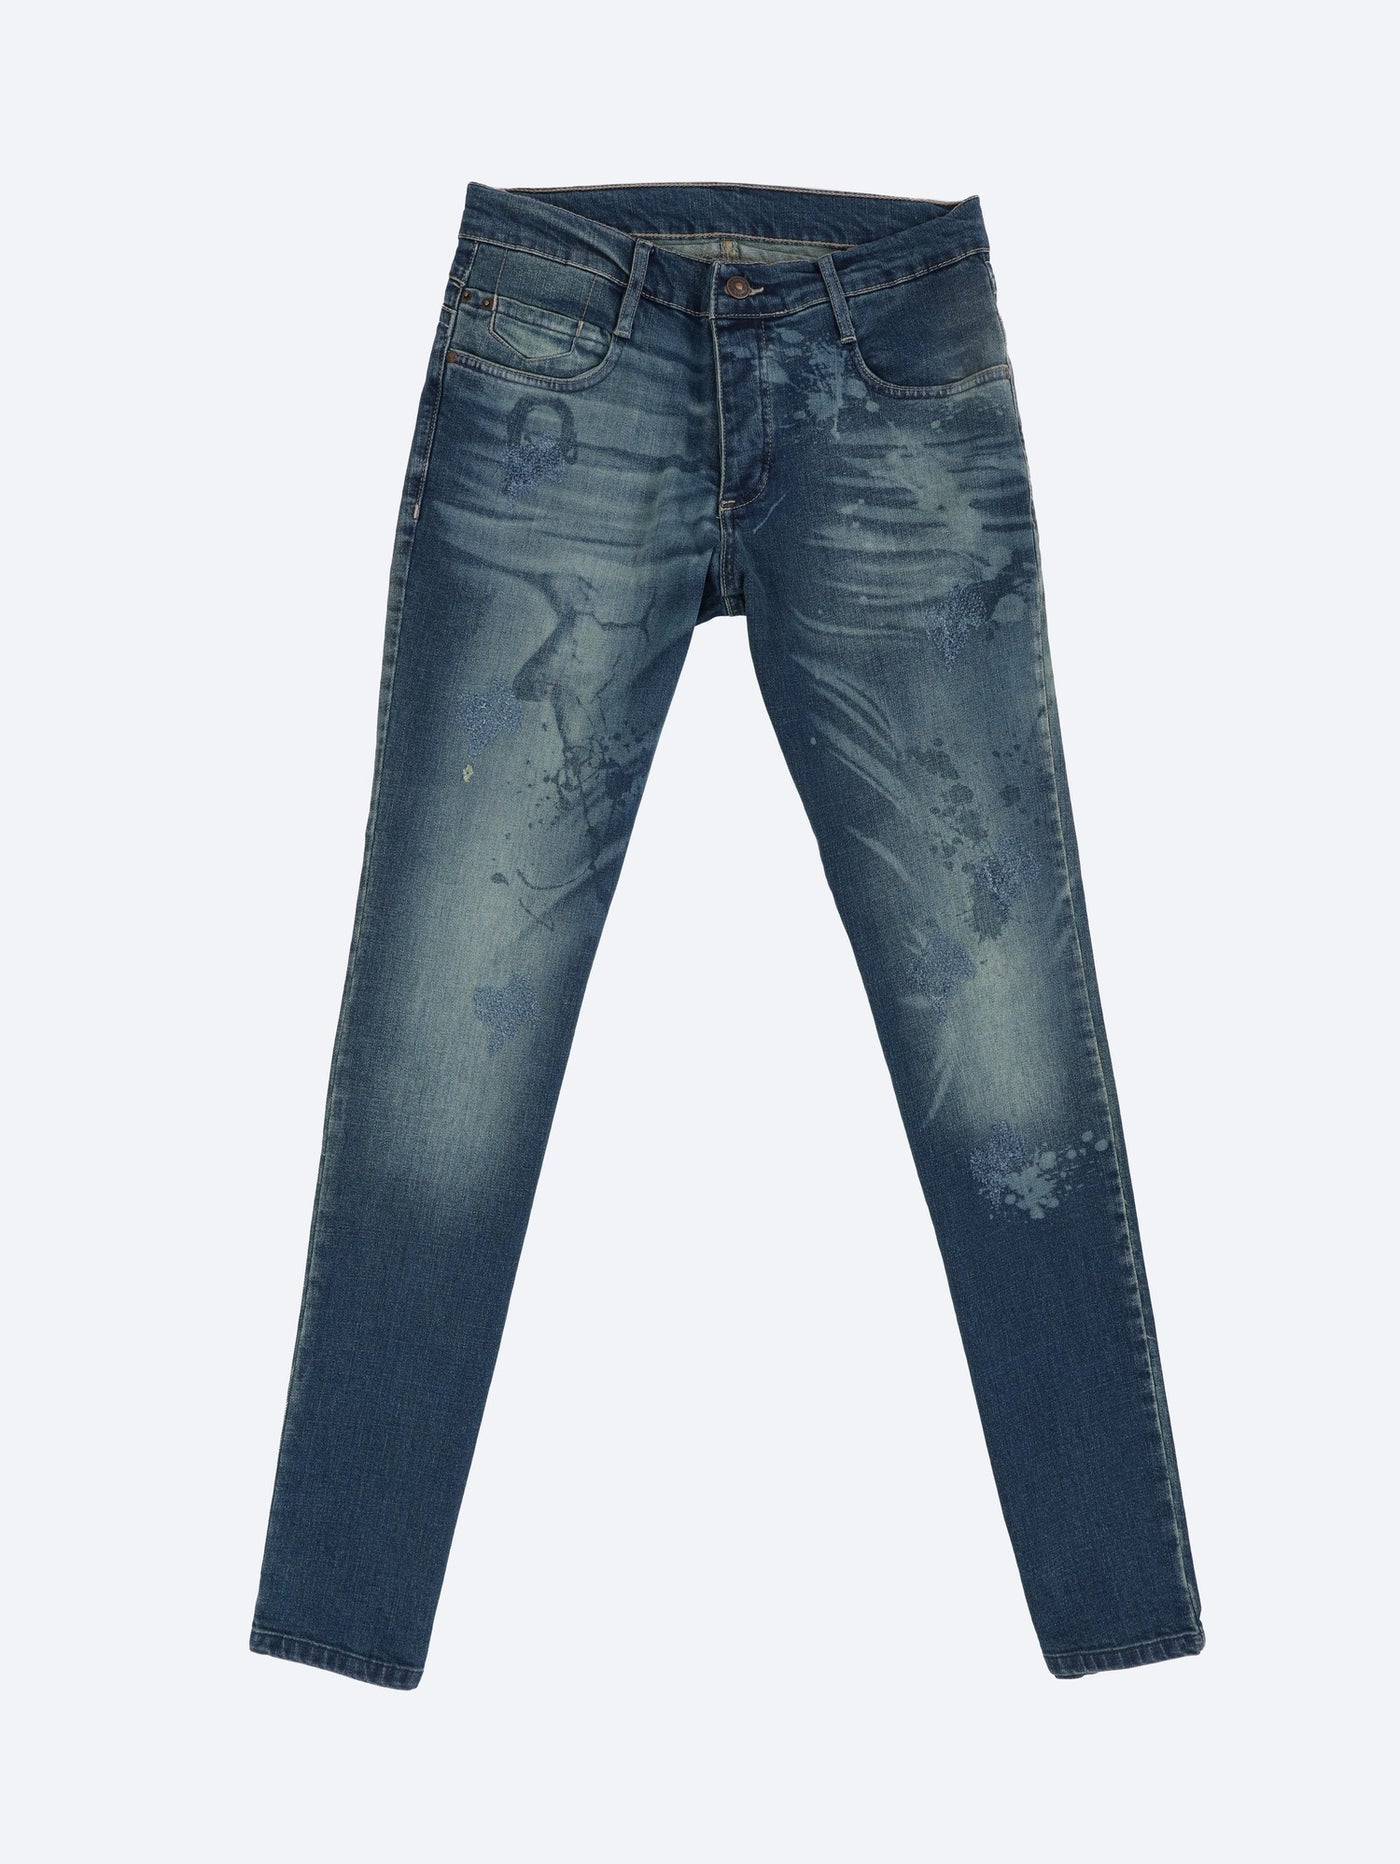 Jeans - Belt Loop - Regular Fit